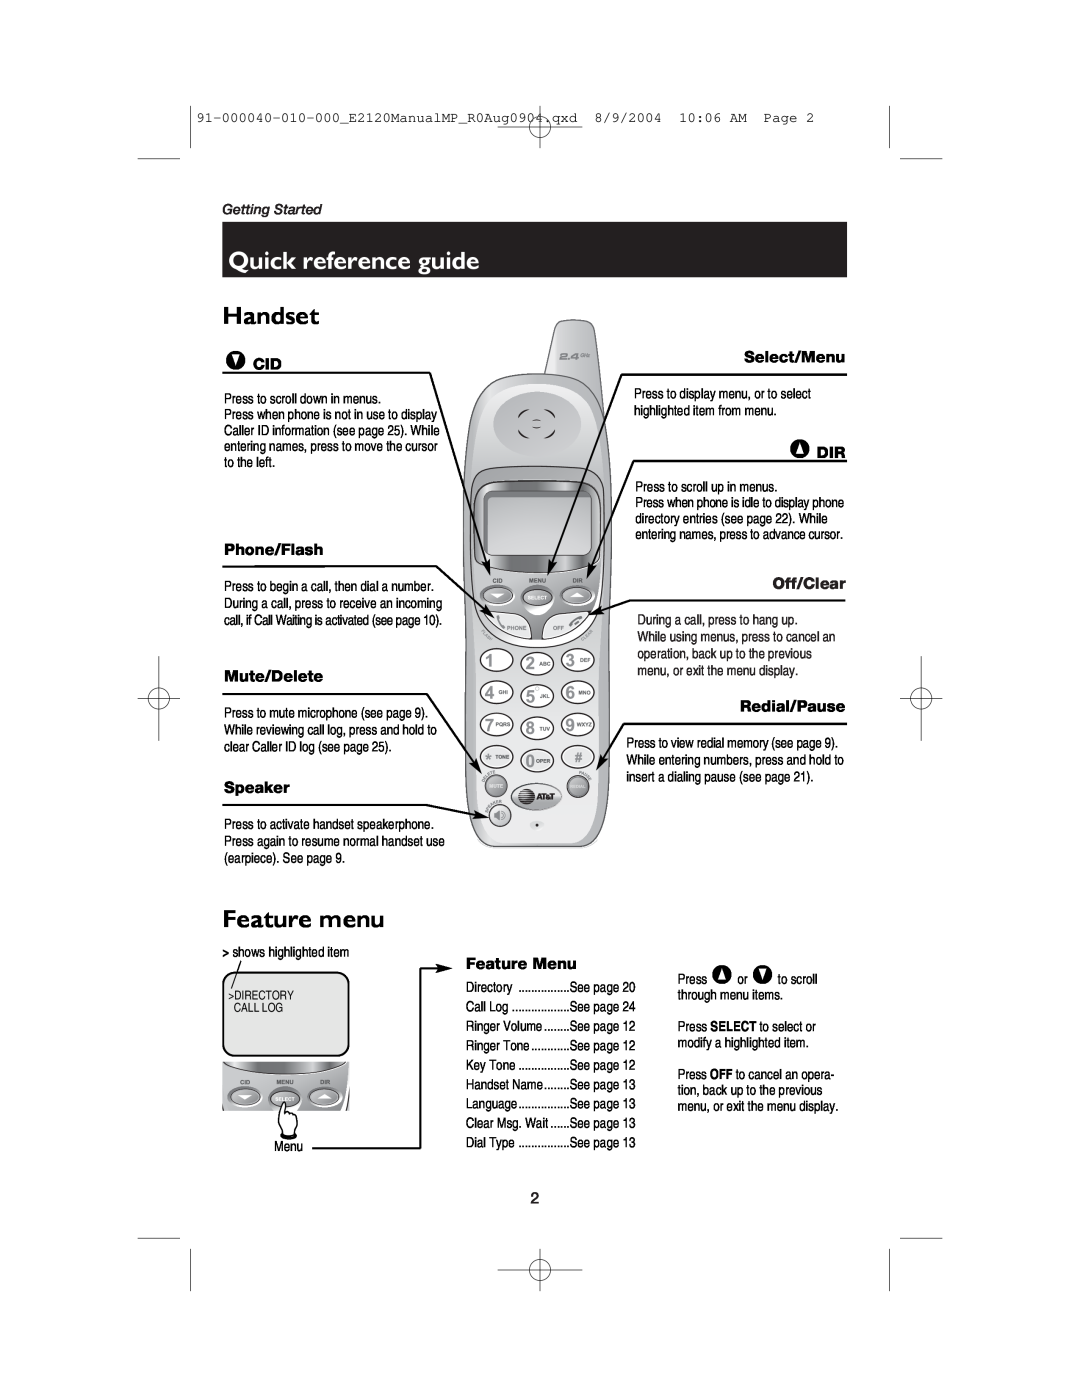 AT&T ATT-E2120 Quick reference guide, Handset, Feature menu, Vcid, Phone/Flash, Mute/Delete, Speaker, Select/Menu 